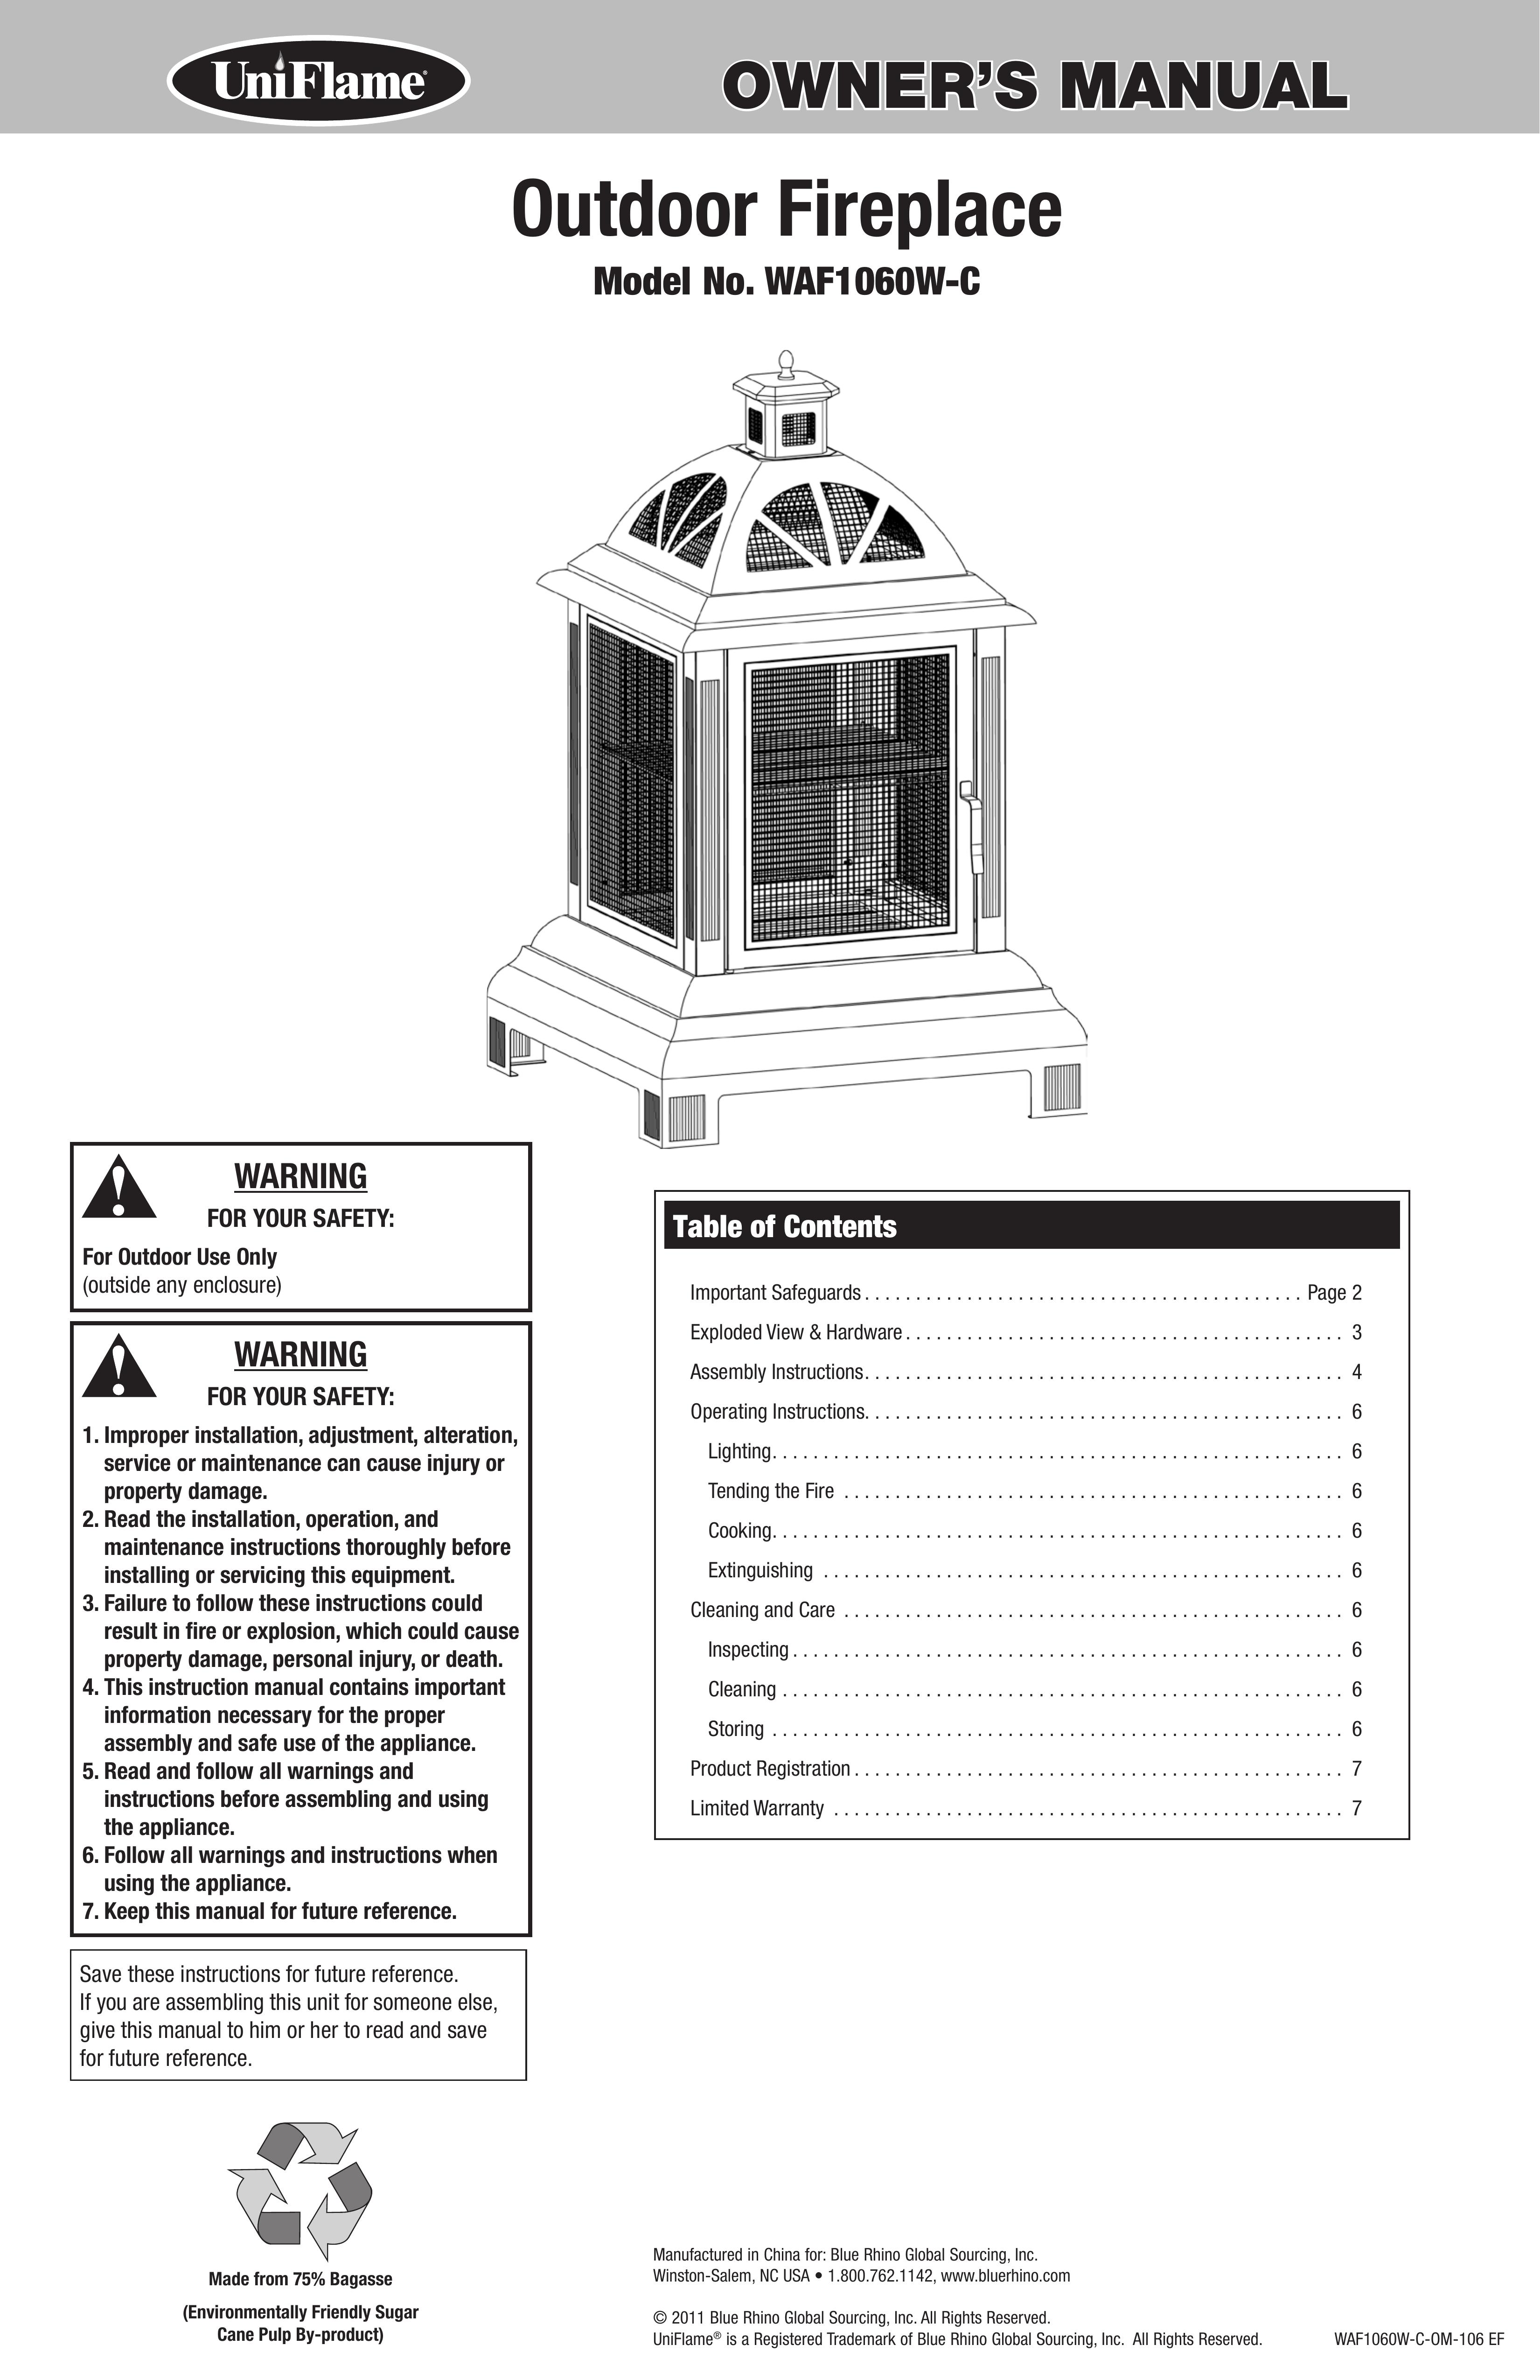 Uniflame WAF1060W-C Outdoor Fireplace User Manual